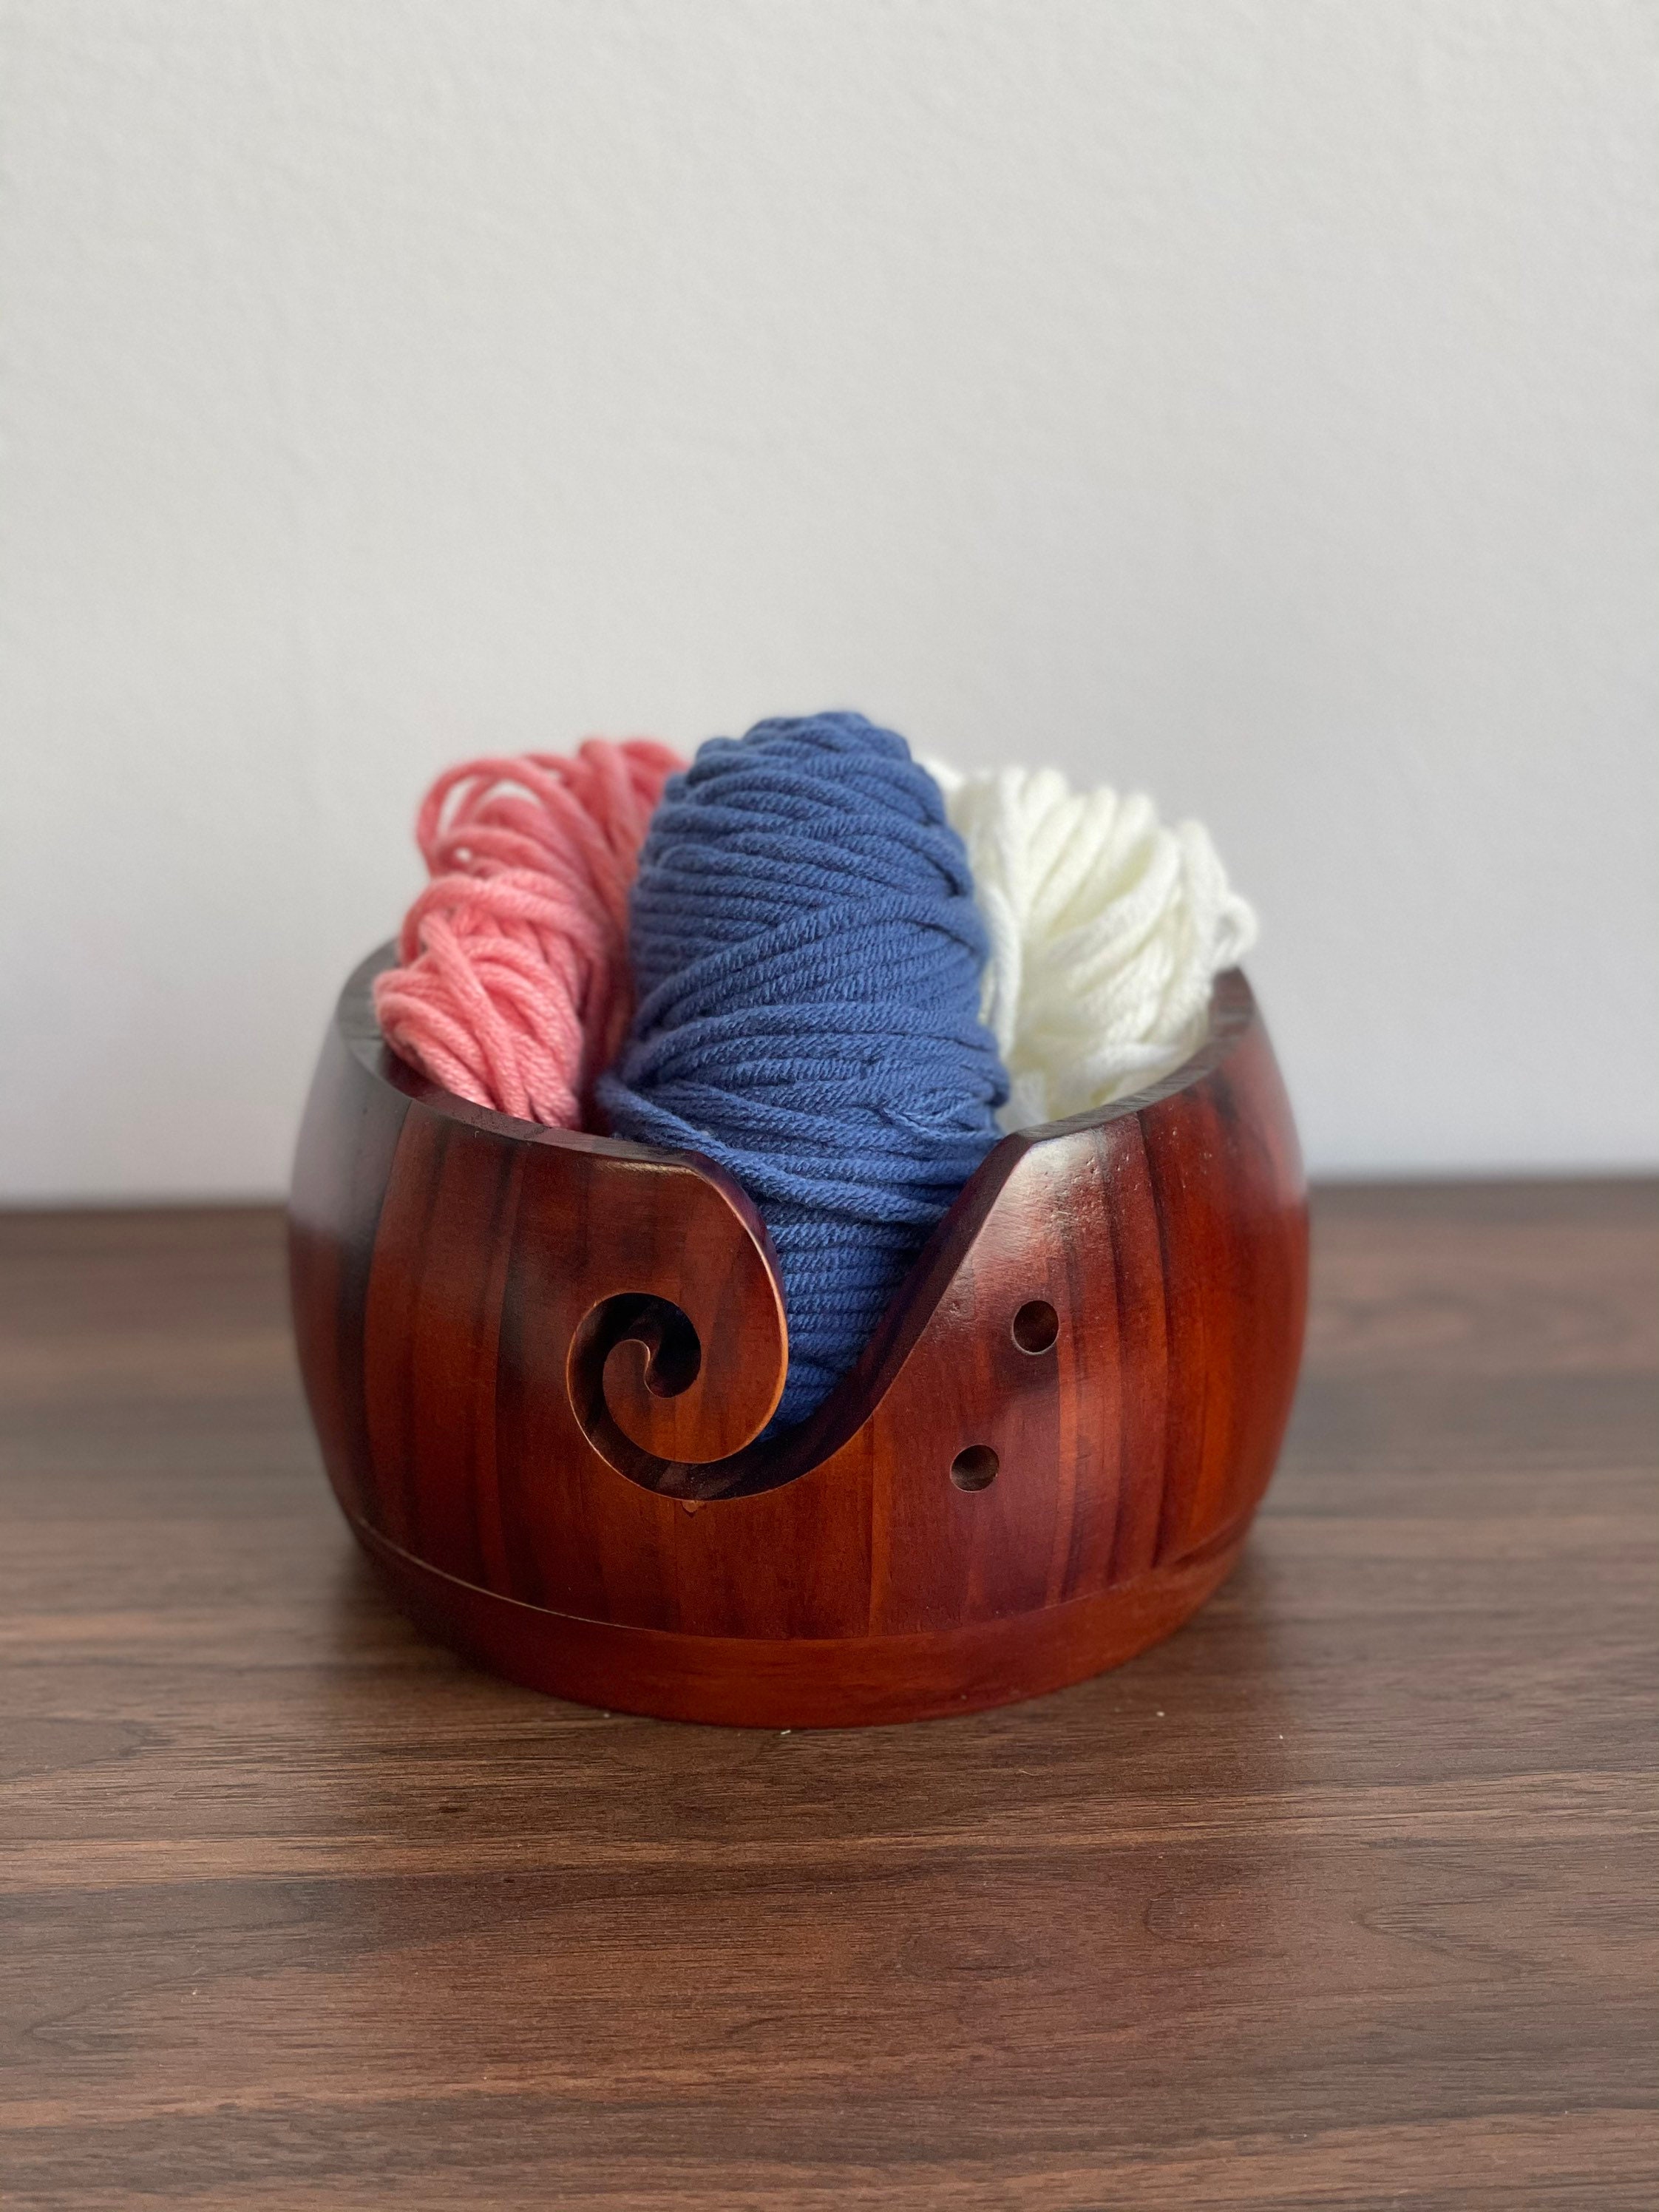 Homemaxs Wooden Yarn Storage Bowl Knitting Yarn Bowl Vintage Yarn Bowl for Crochet with Wood Plug, Men's, Size: Small